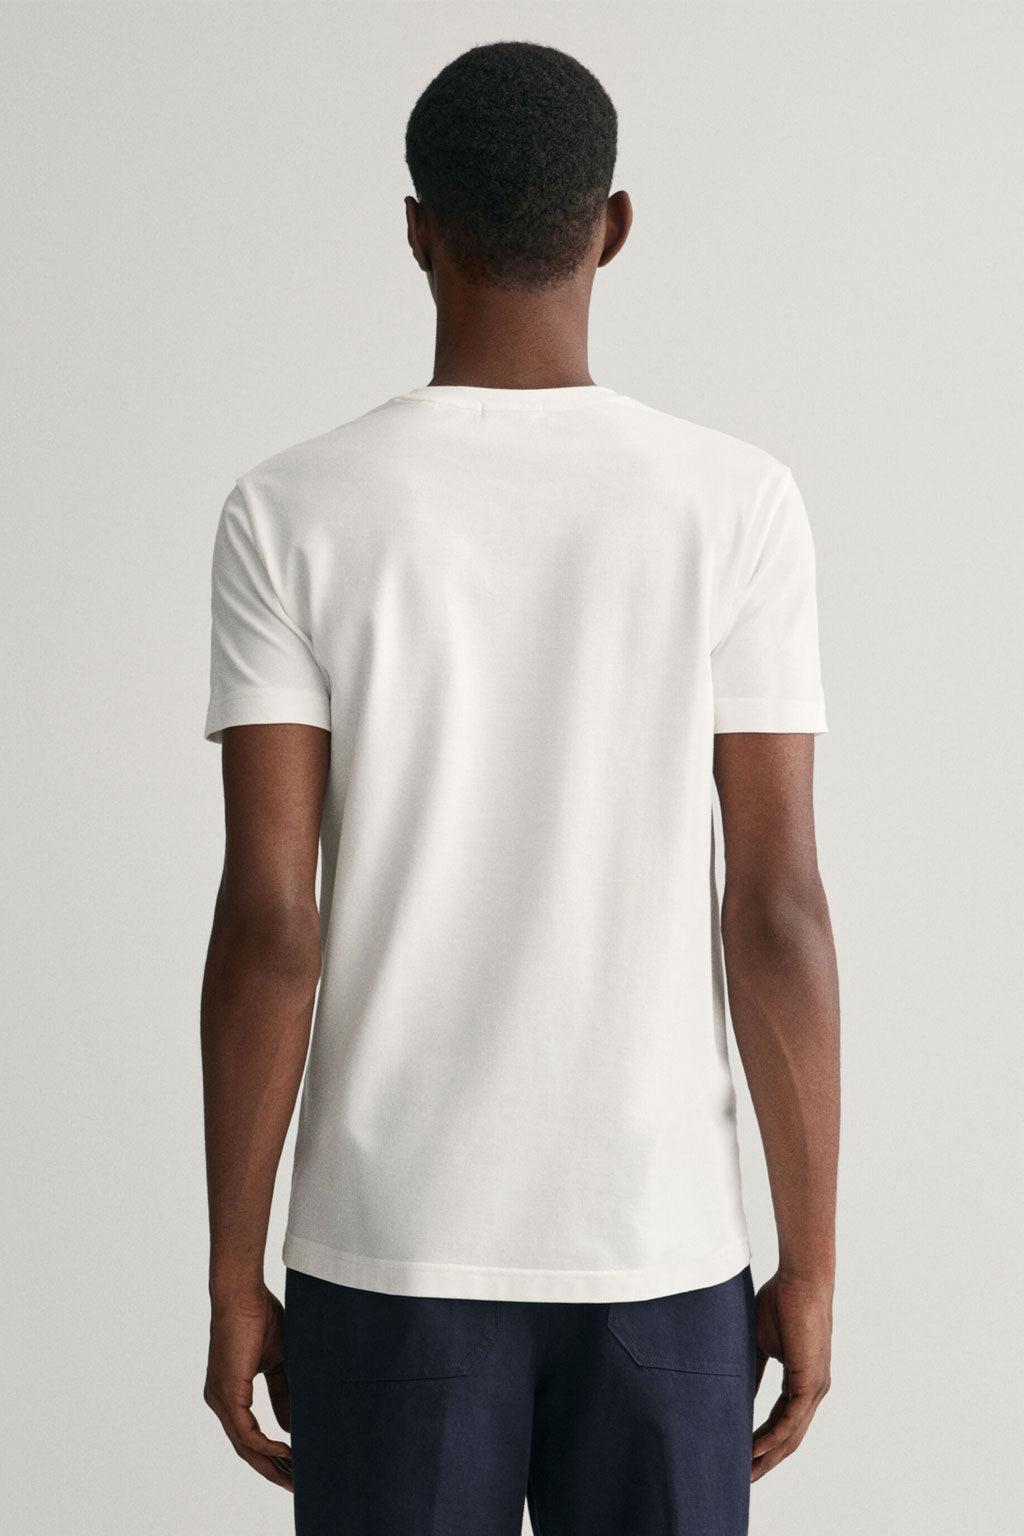 Gant t-shirt - Big Boss | the menswear concept